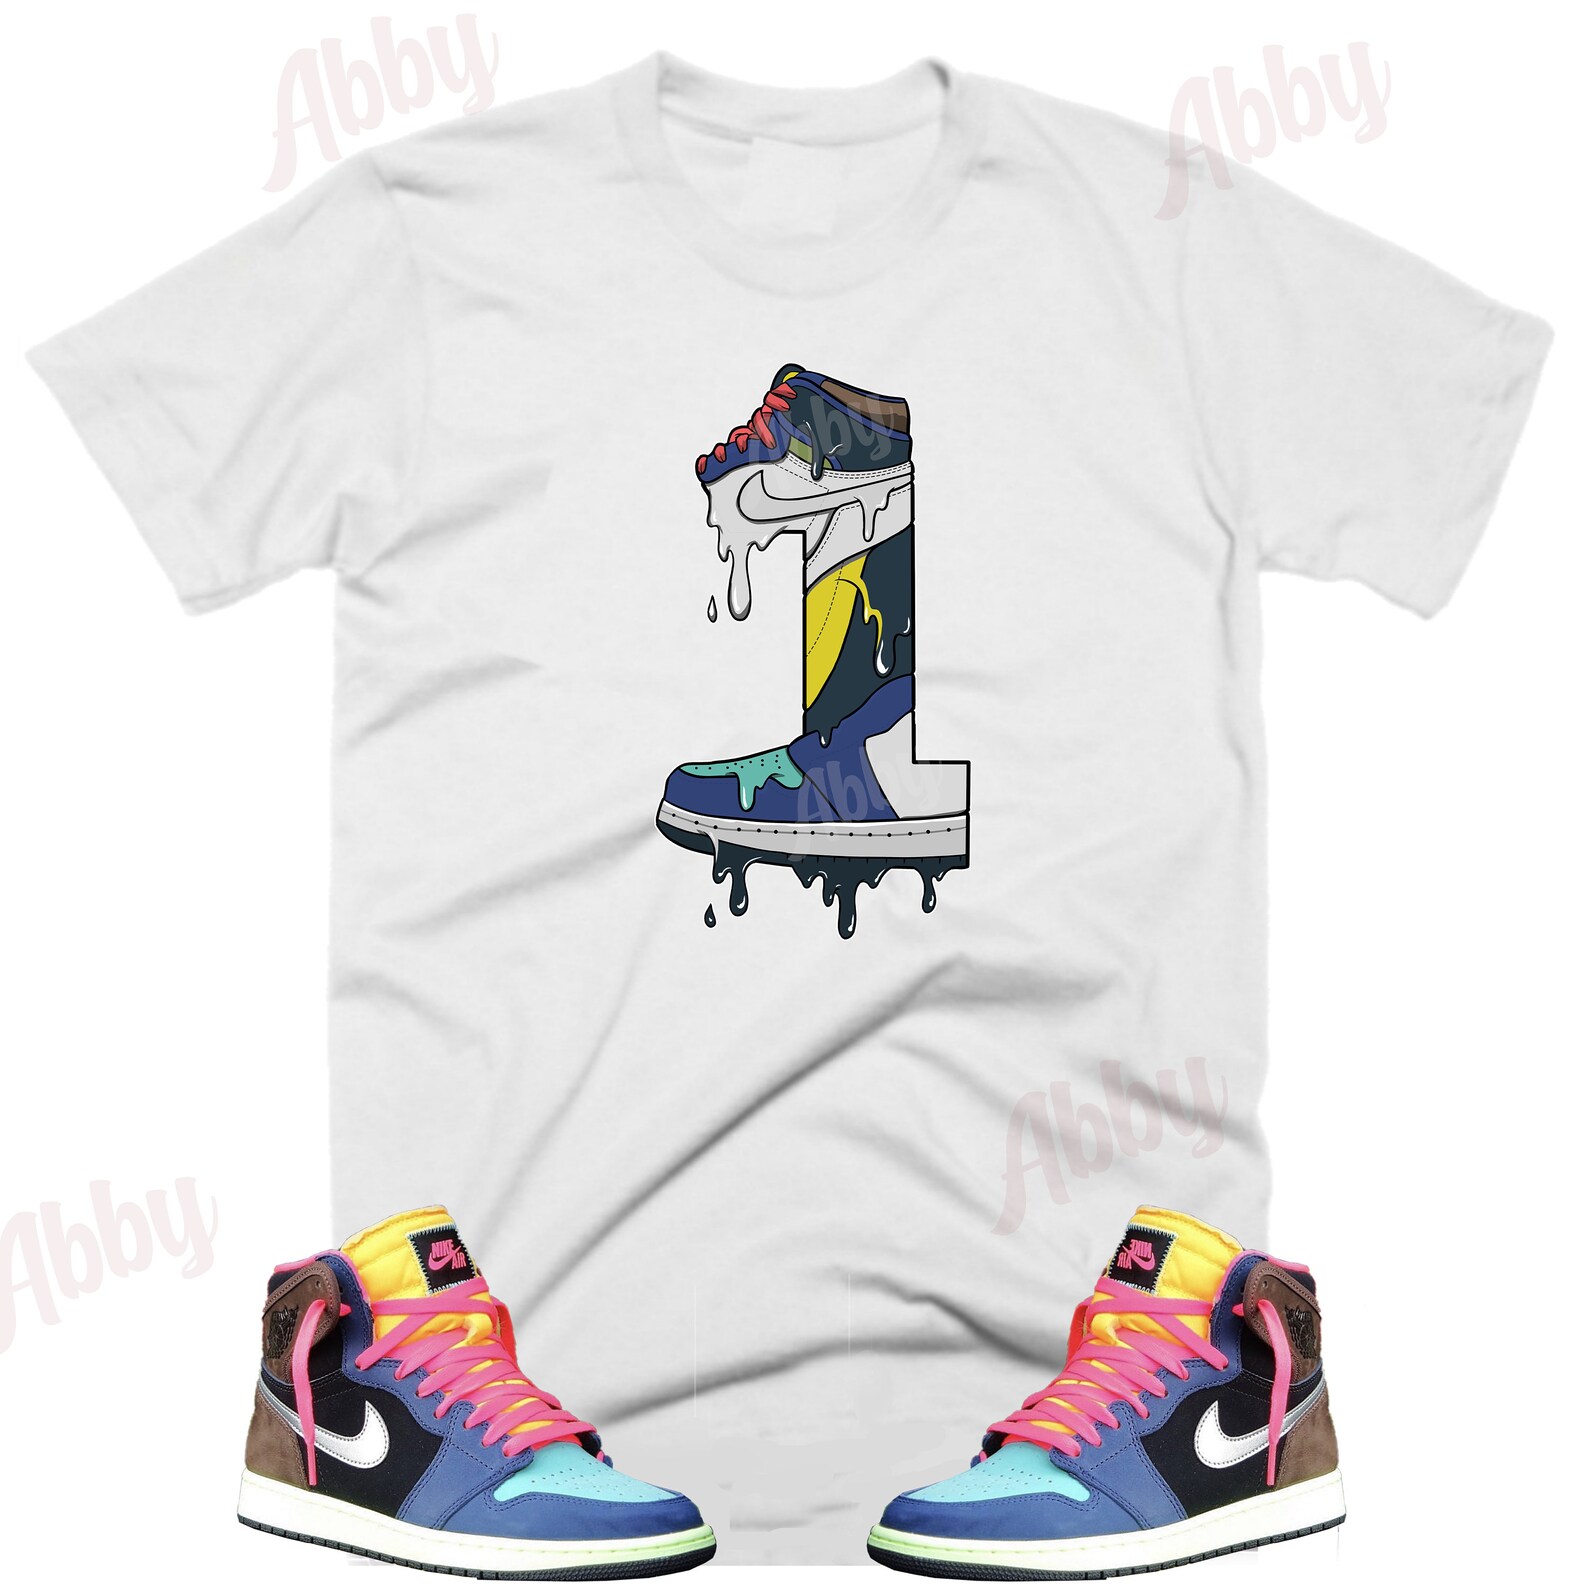 Number Shoe Dripping Air Jordan 1 Bio Hack Sneaker Tee Retro | Etsy